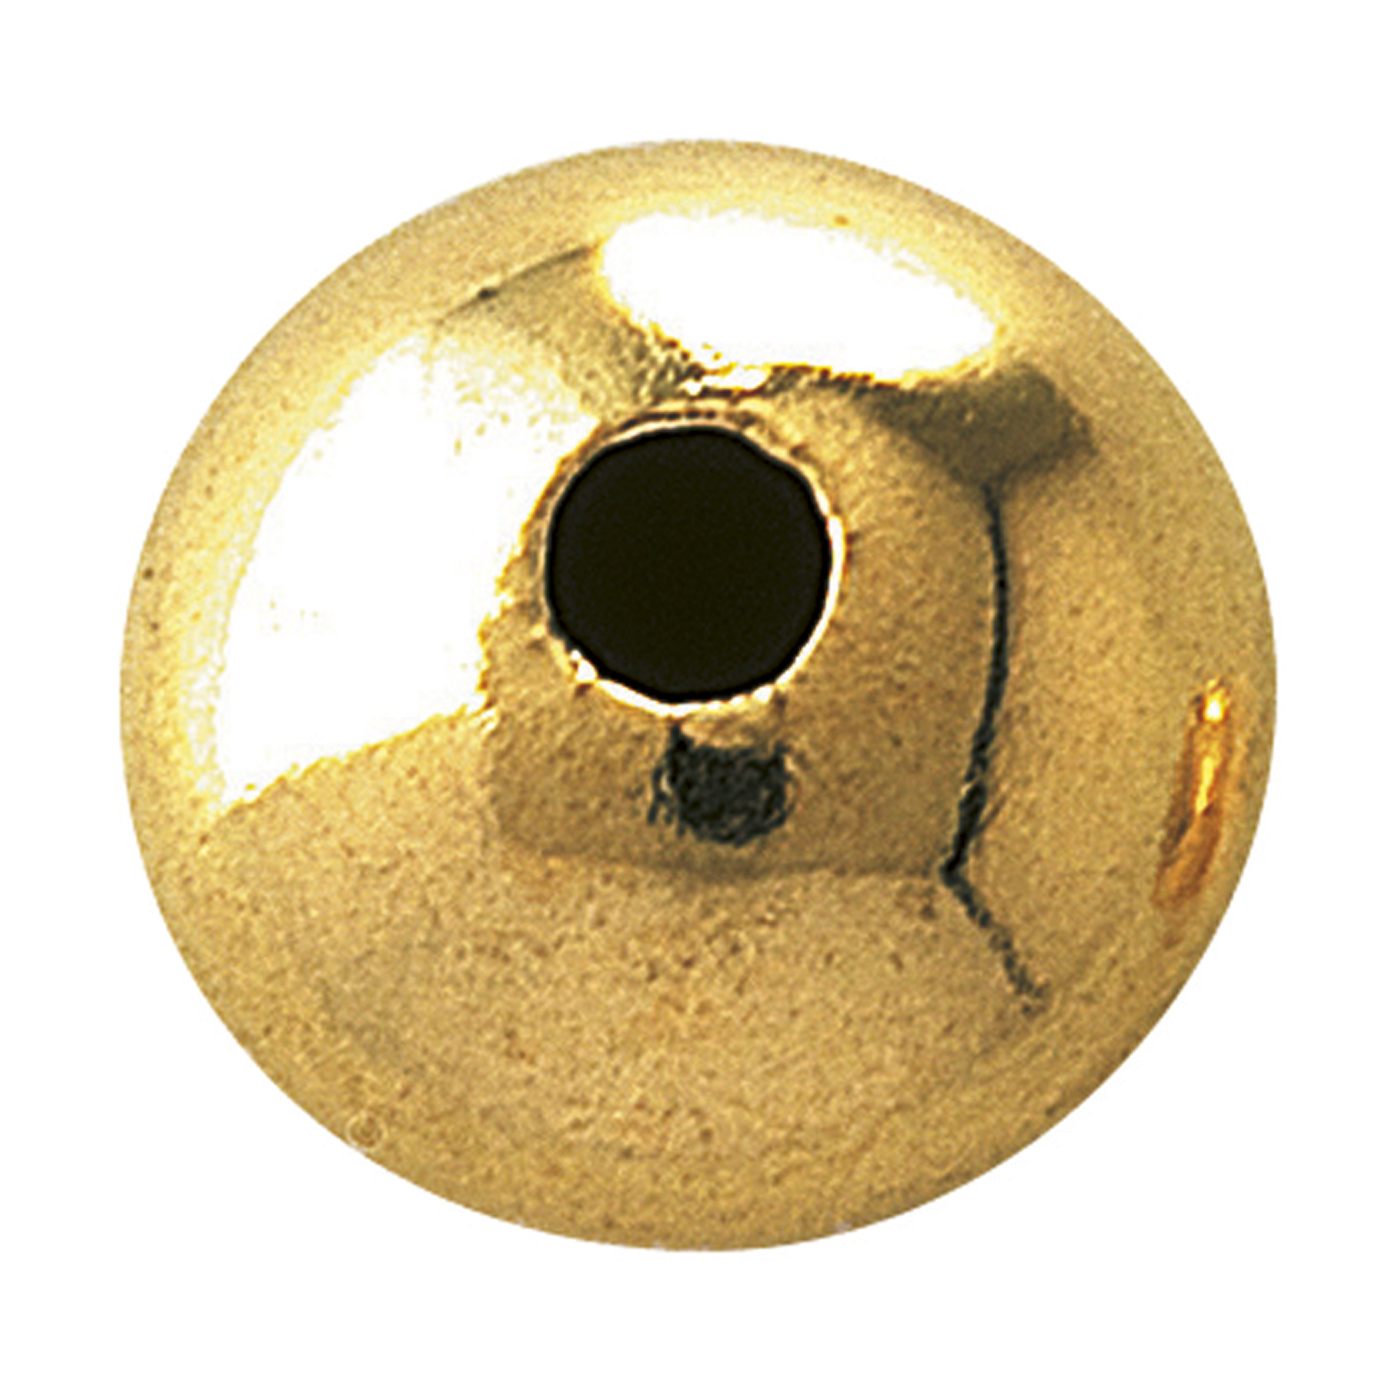 Lense, Rolled Gold Polished, ø 5.7 x 3.3 mm - 1 piece